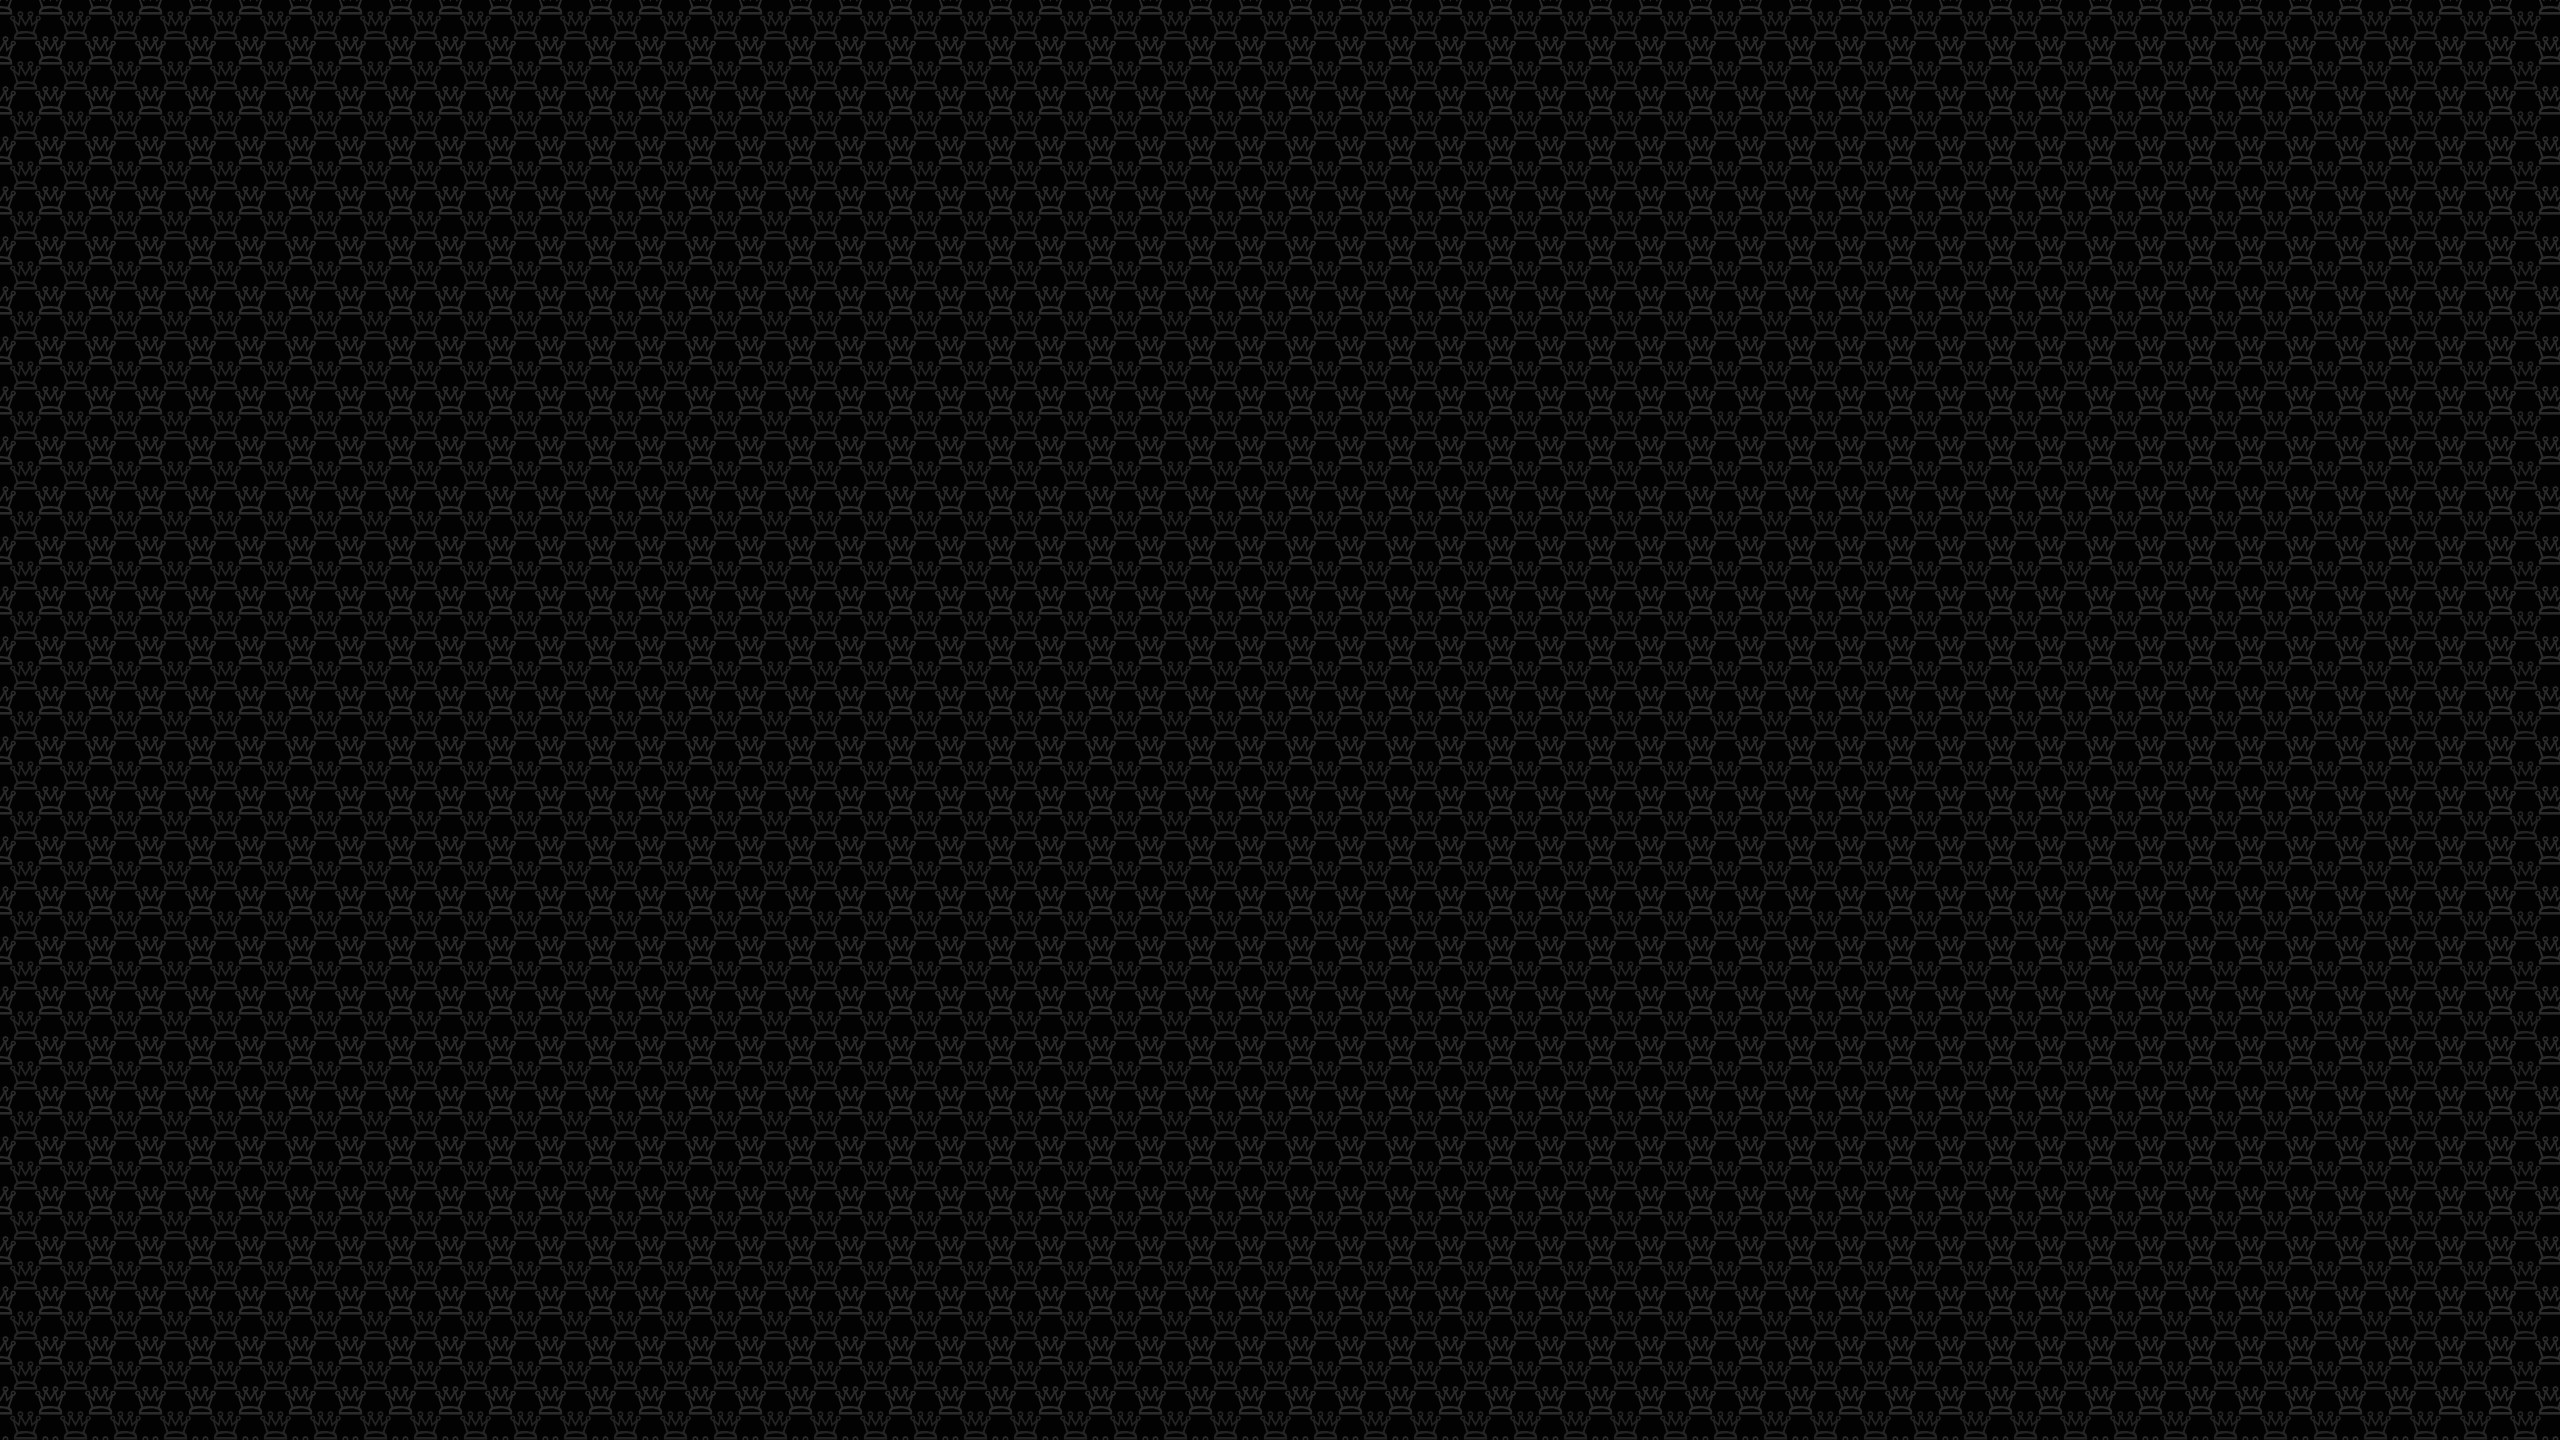 2560x1440 Black wallpaper desktop royal wallpapers - 1302505